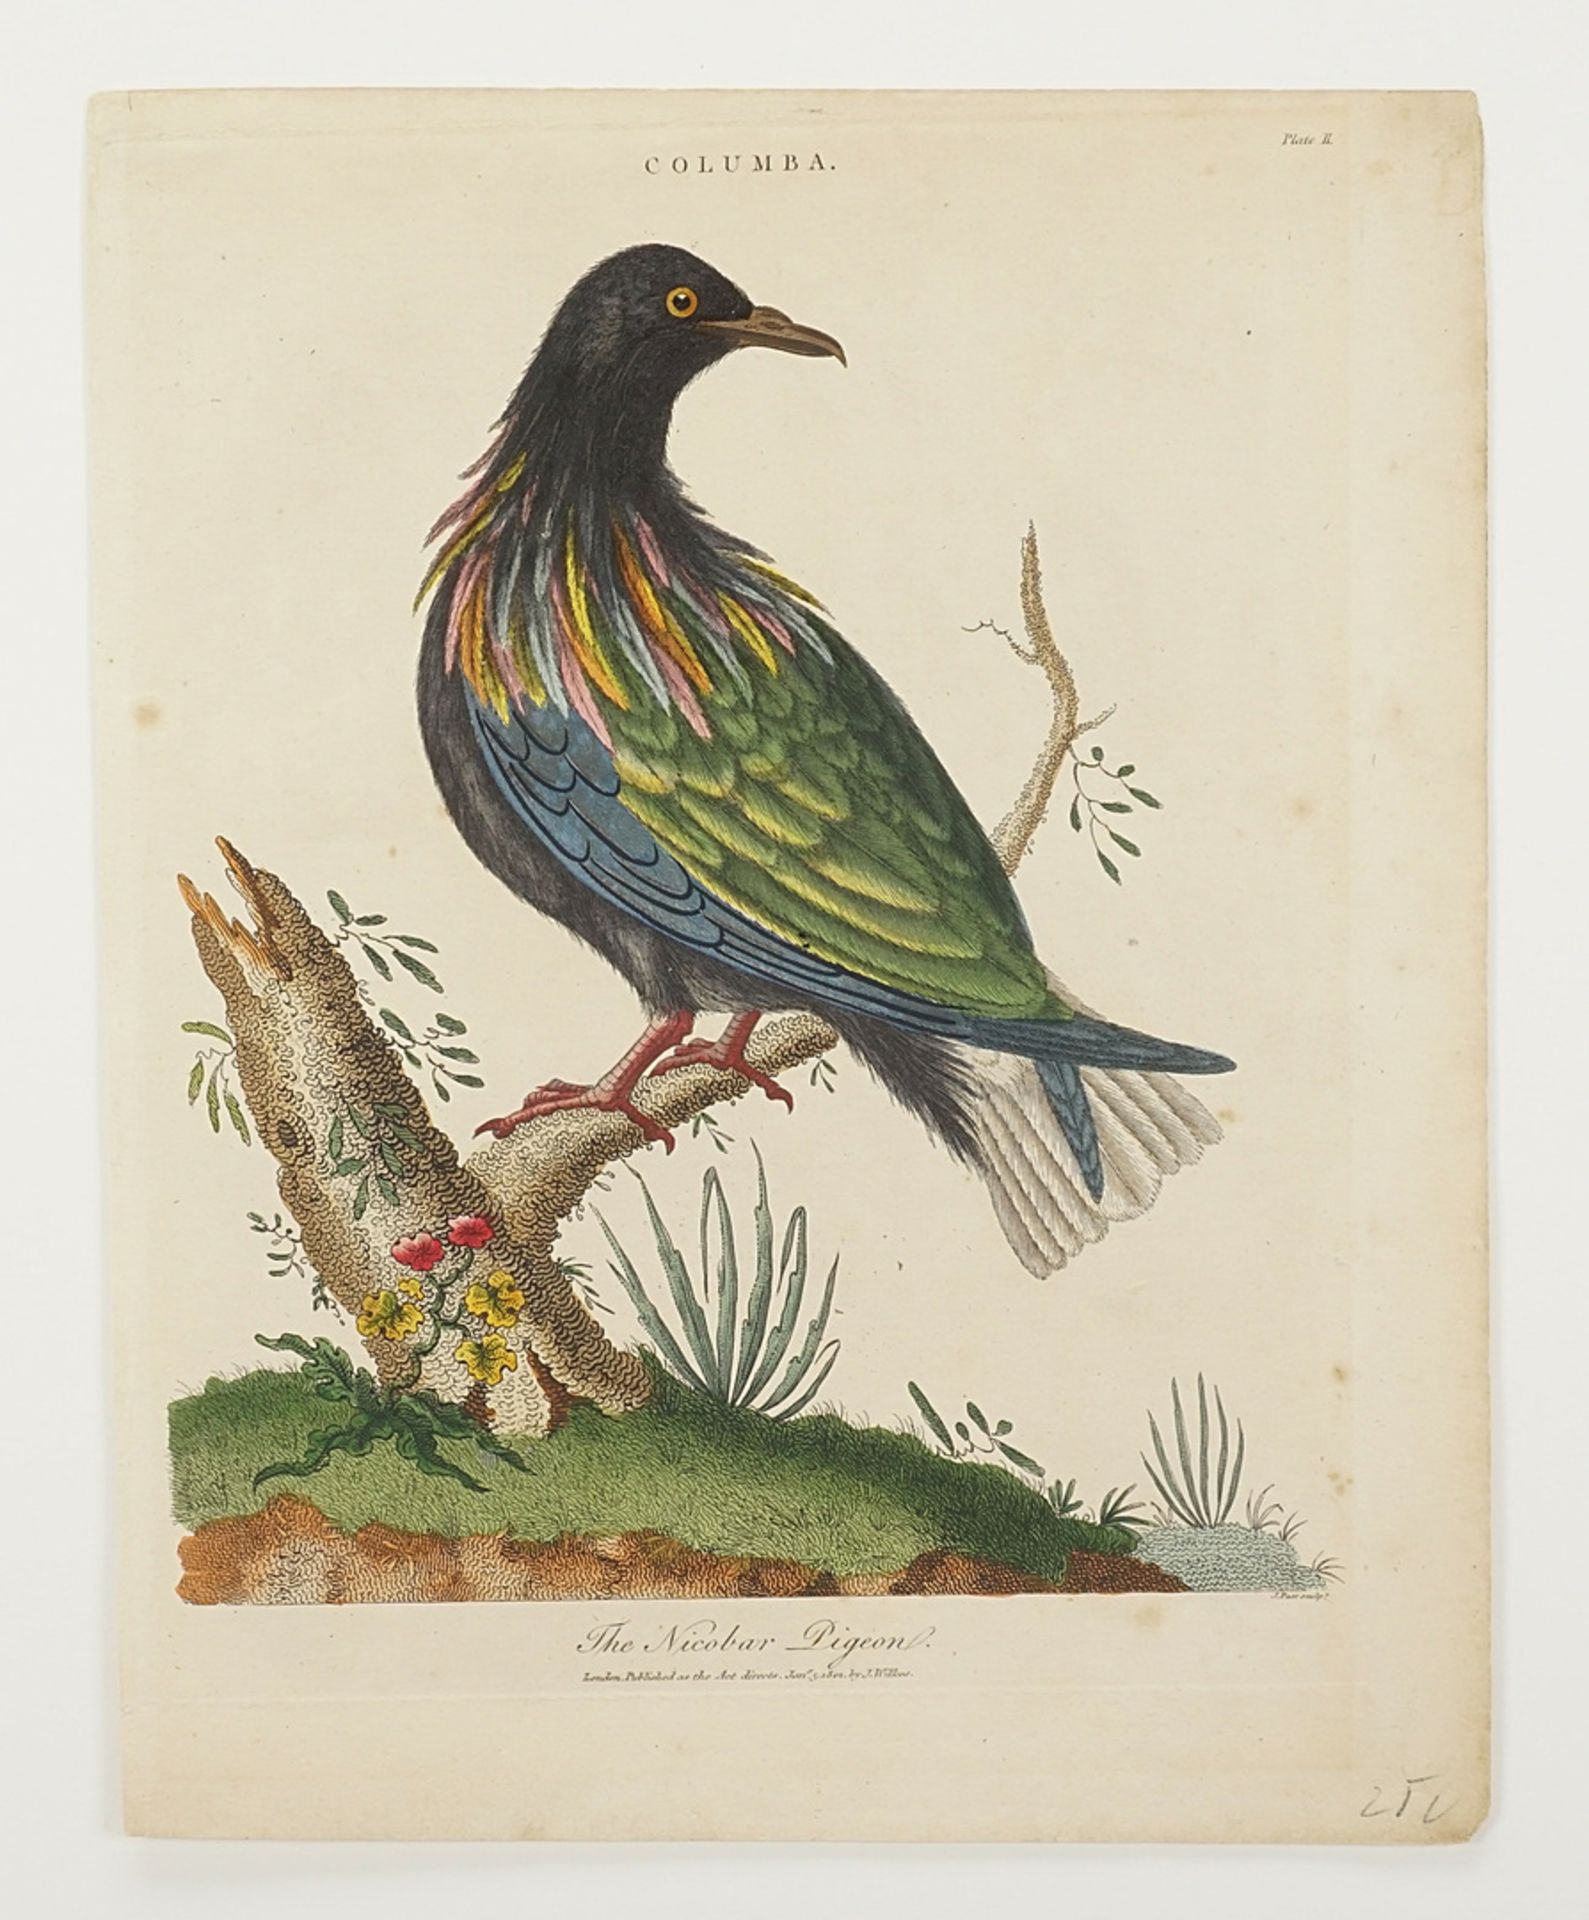 J. Pass, "The Nicobar Pigeon" - Image 3 of 3